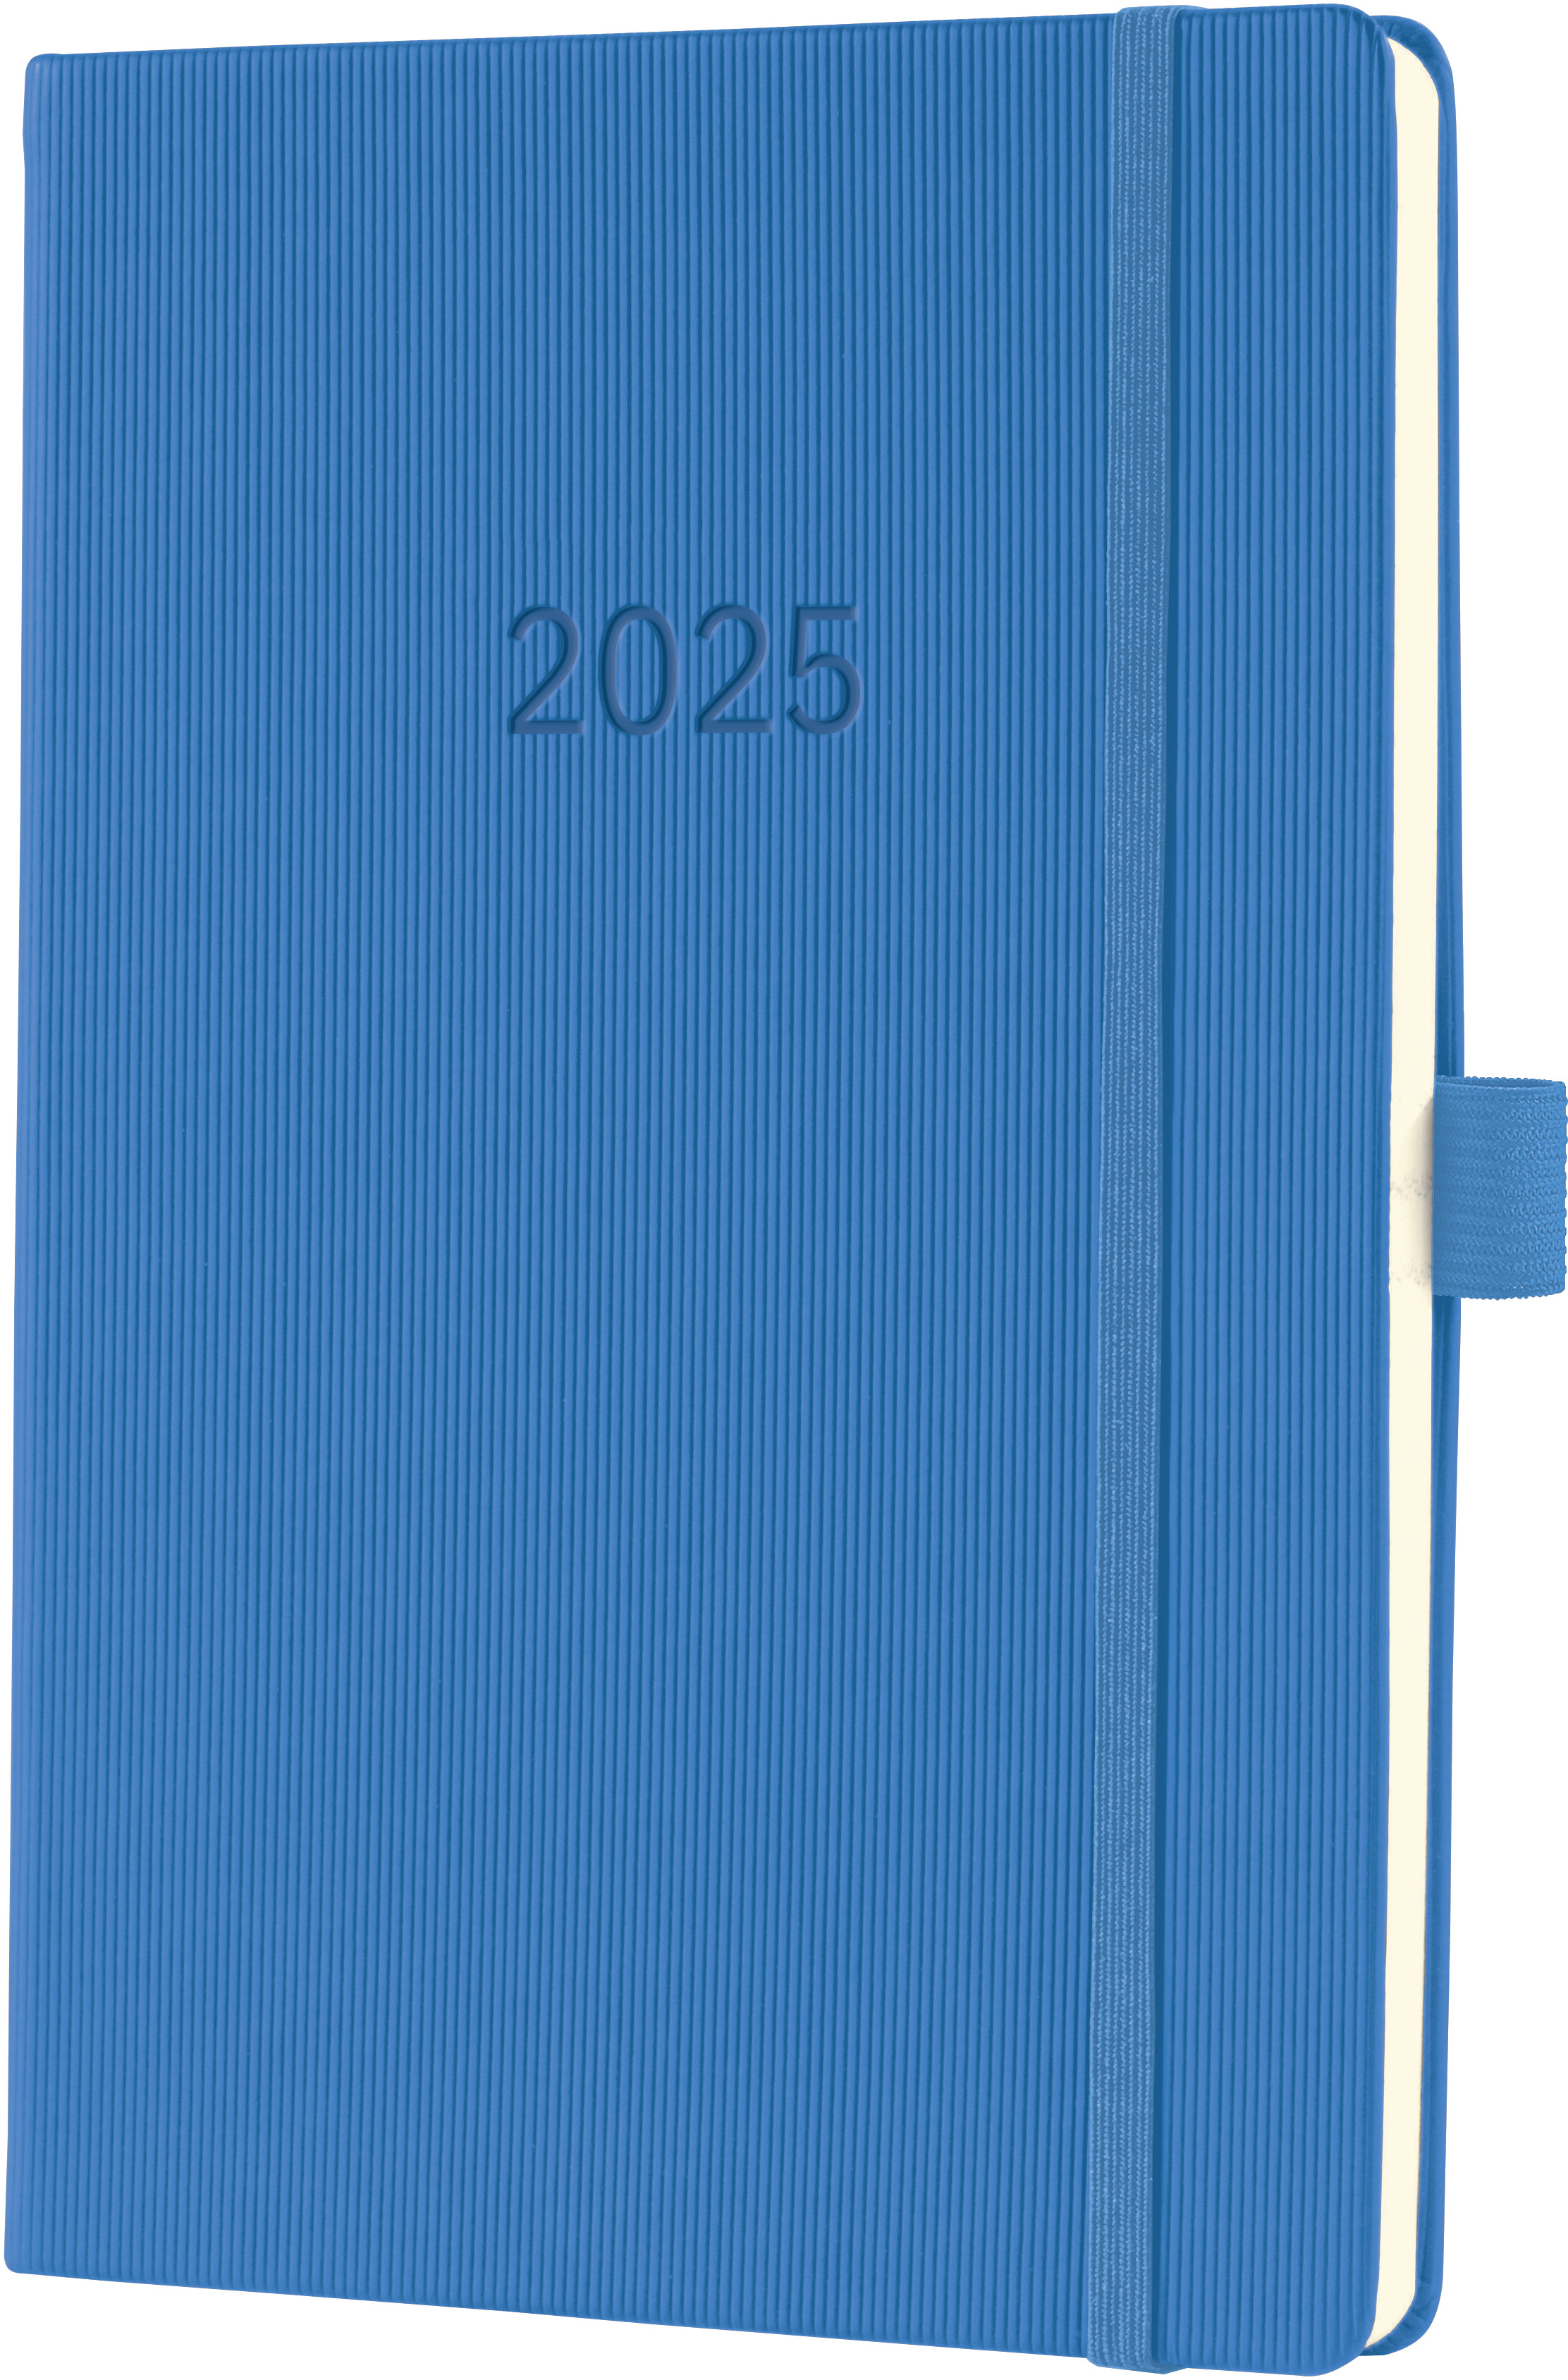 CONCEPTUM Calendrier semainier 2025 C2568 1S/2P bleu 21.3x14.8cm